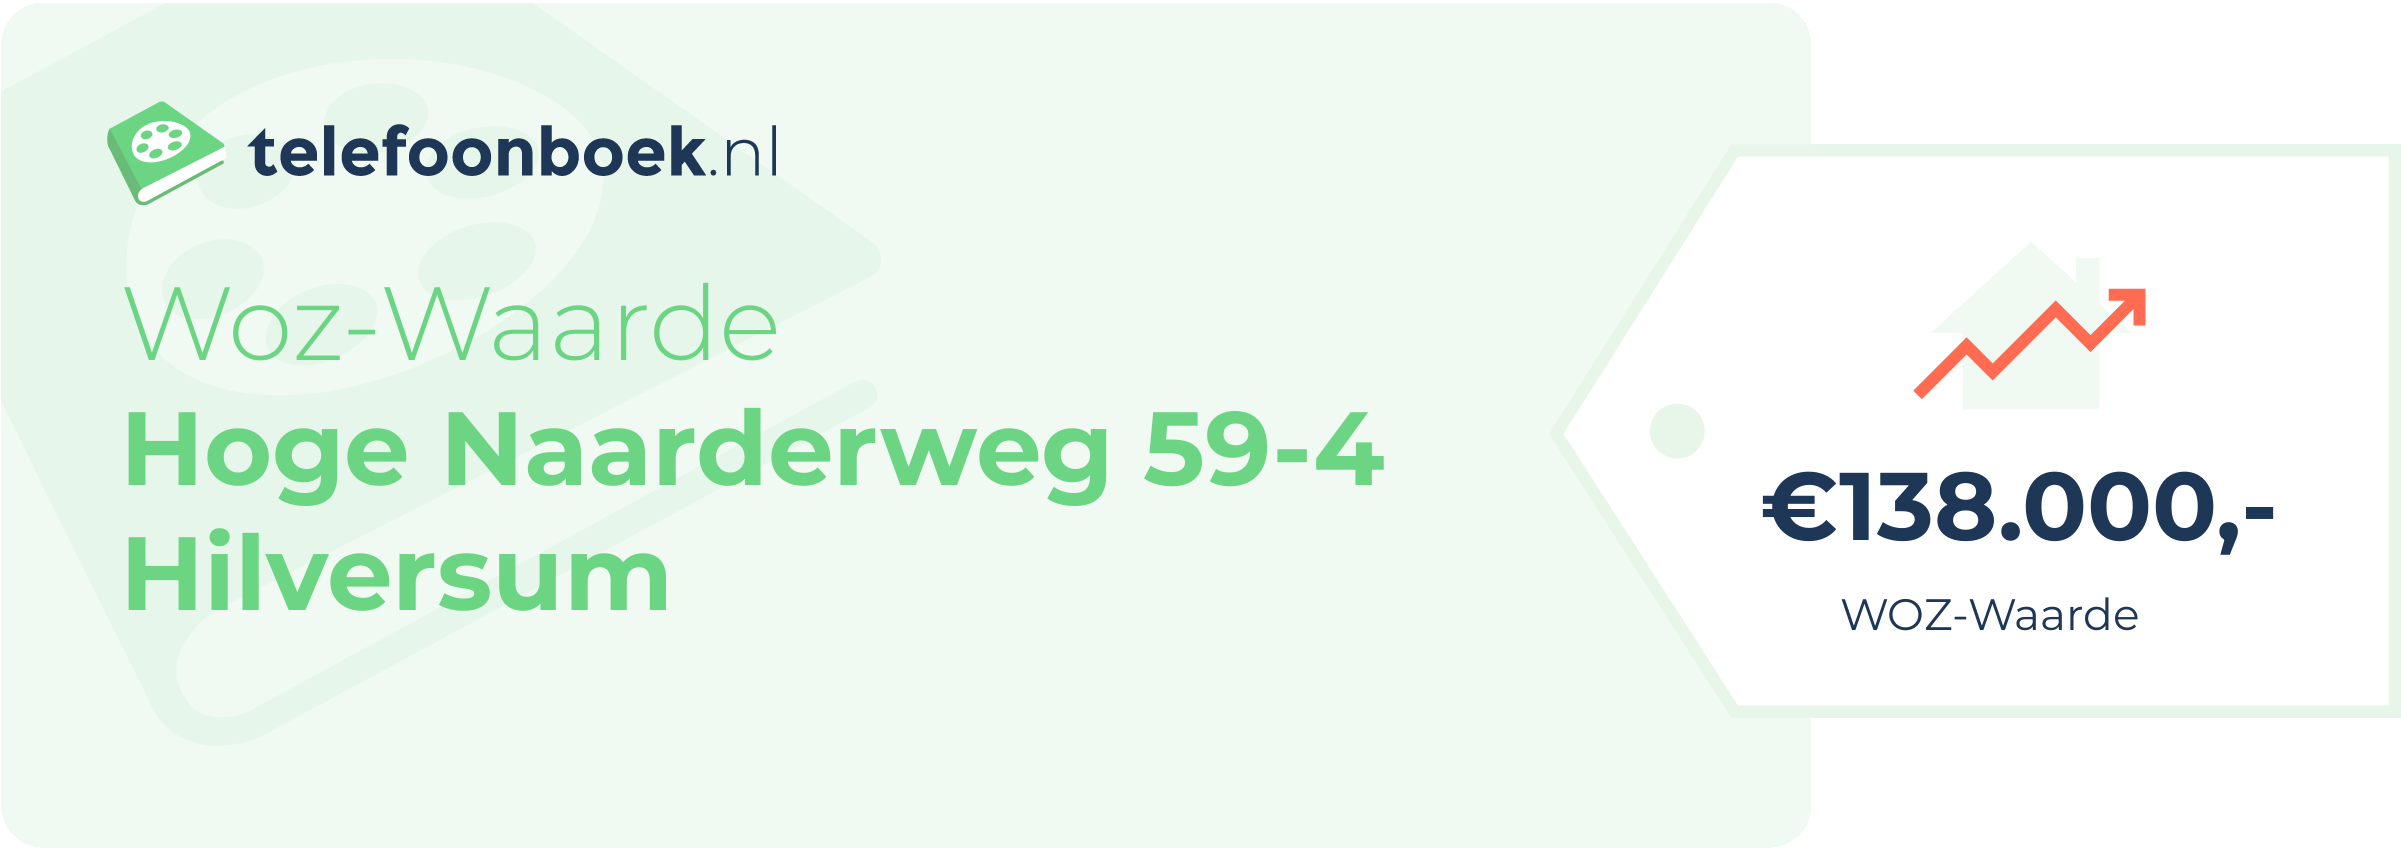 WOZ-waarde Hoge Naarderweg 59-4 Hilversum